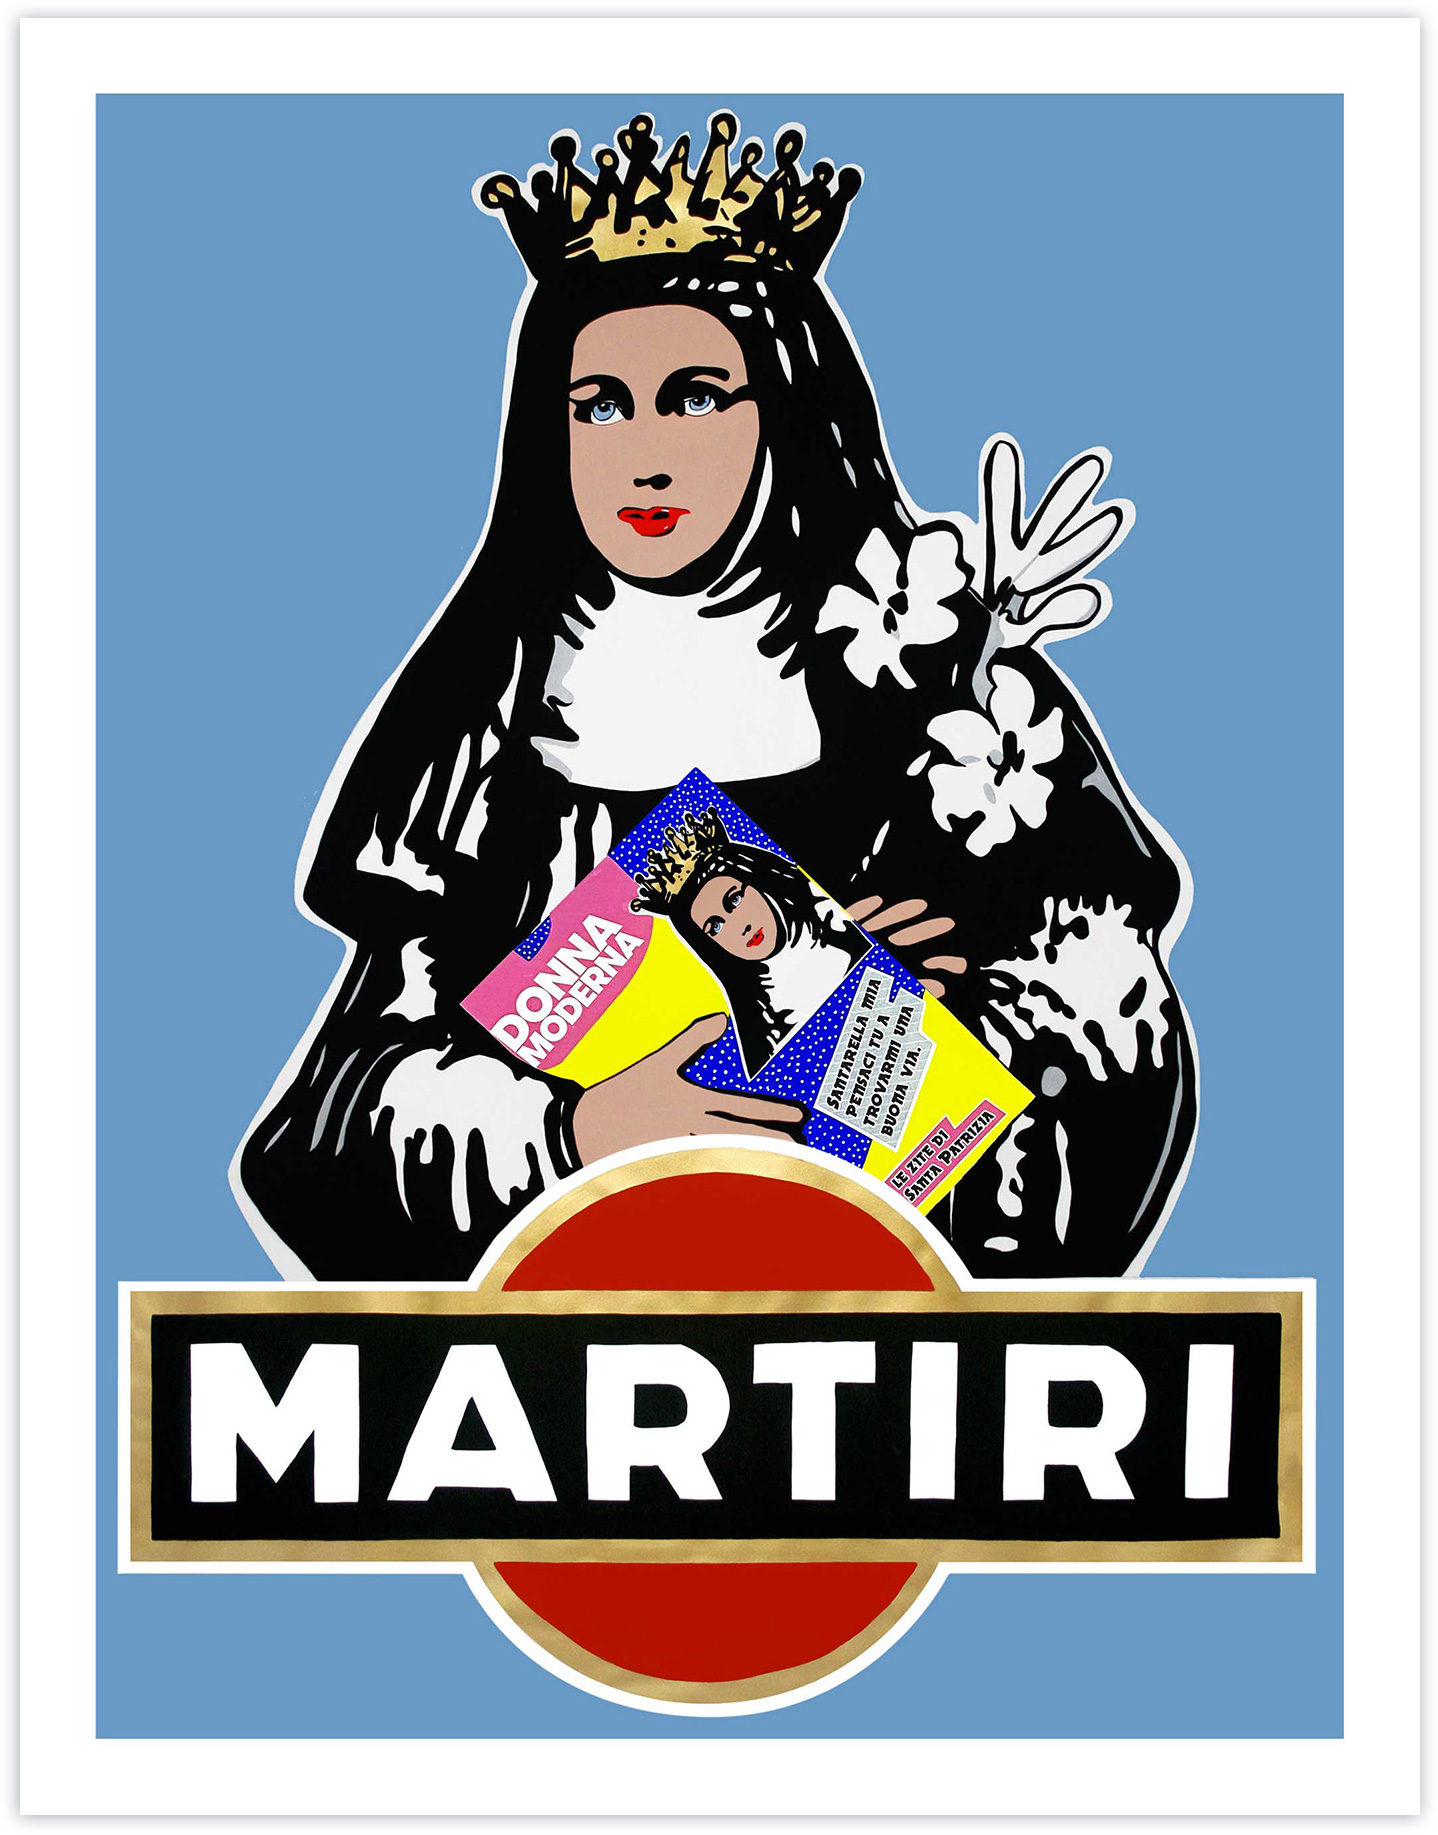 "A Martyr to Drink" Donna moderna edition (Saint Patricia) 2021